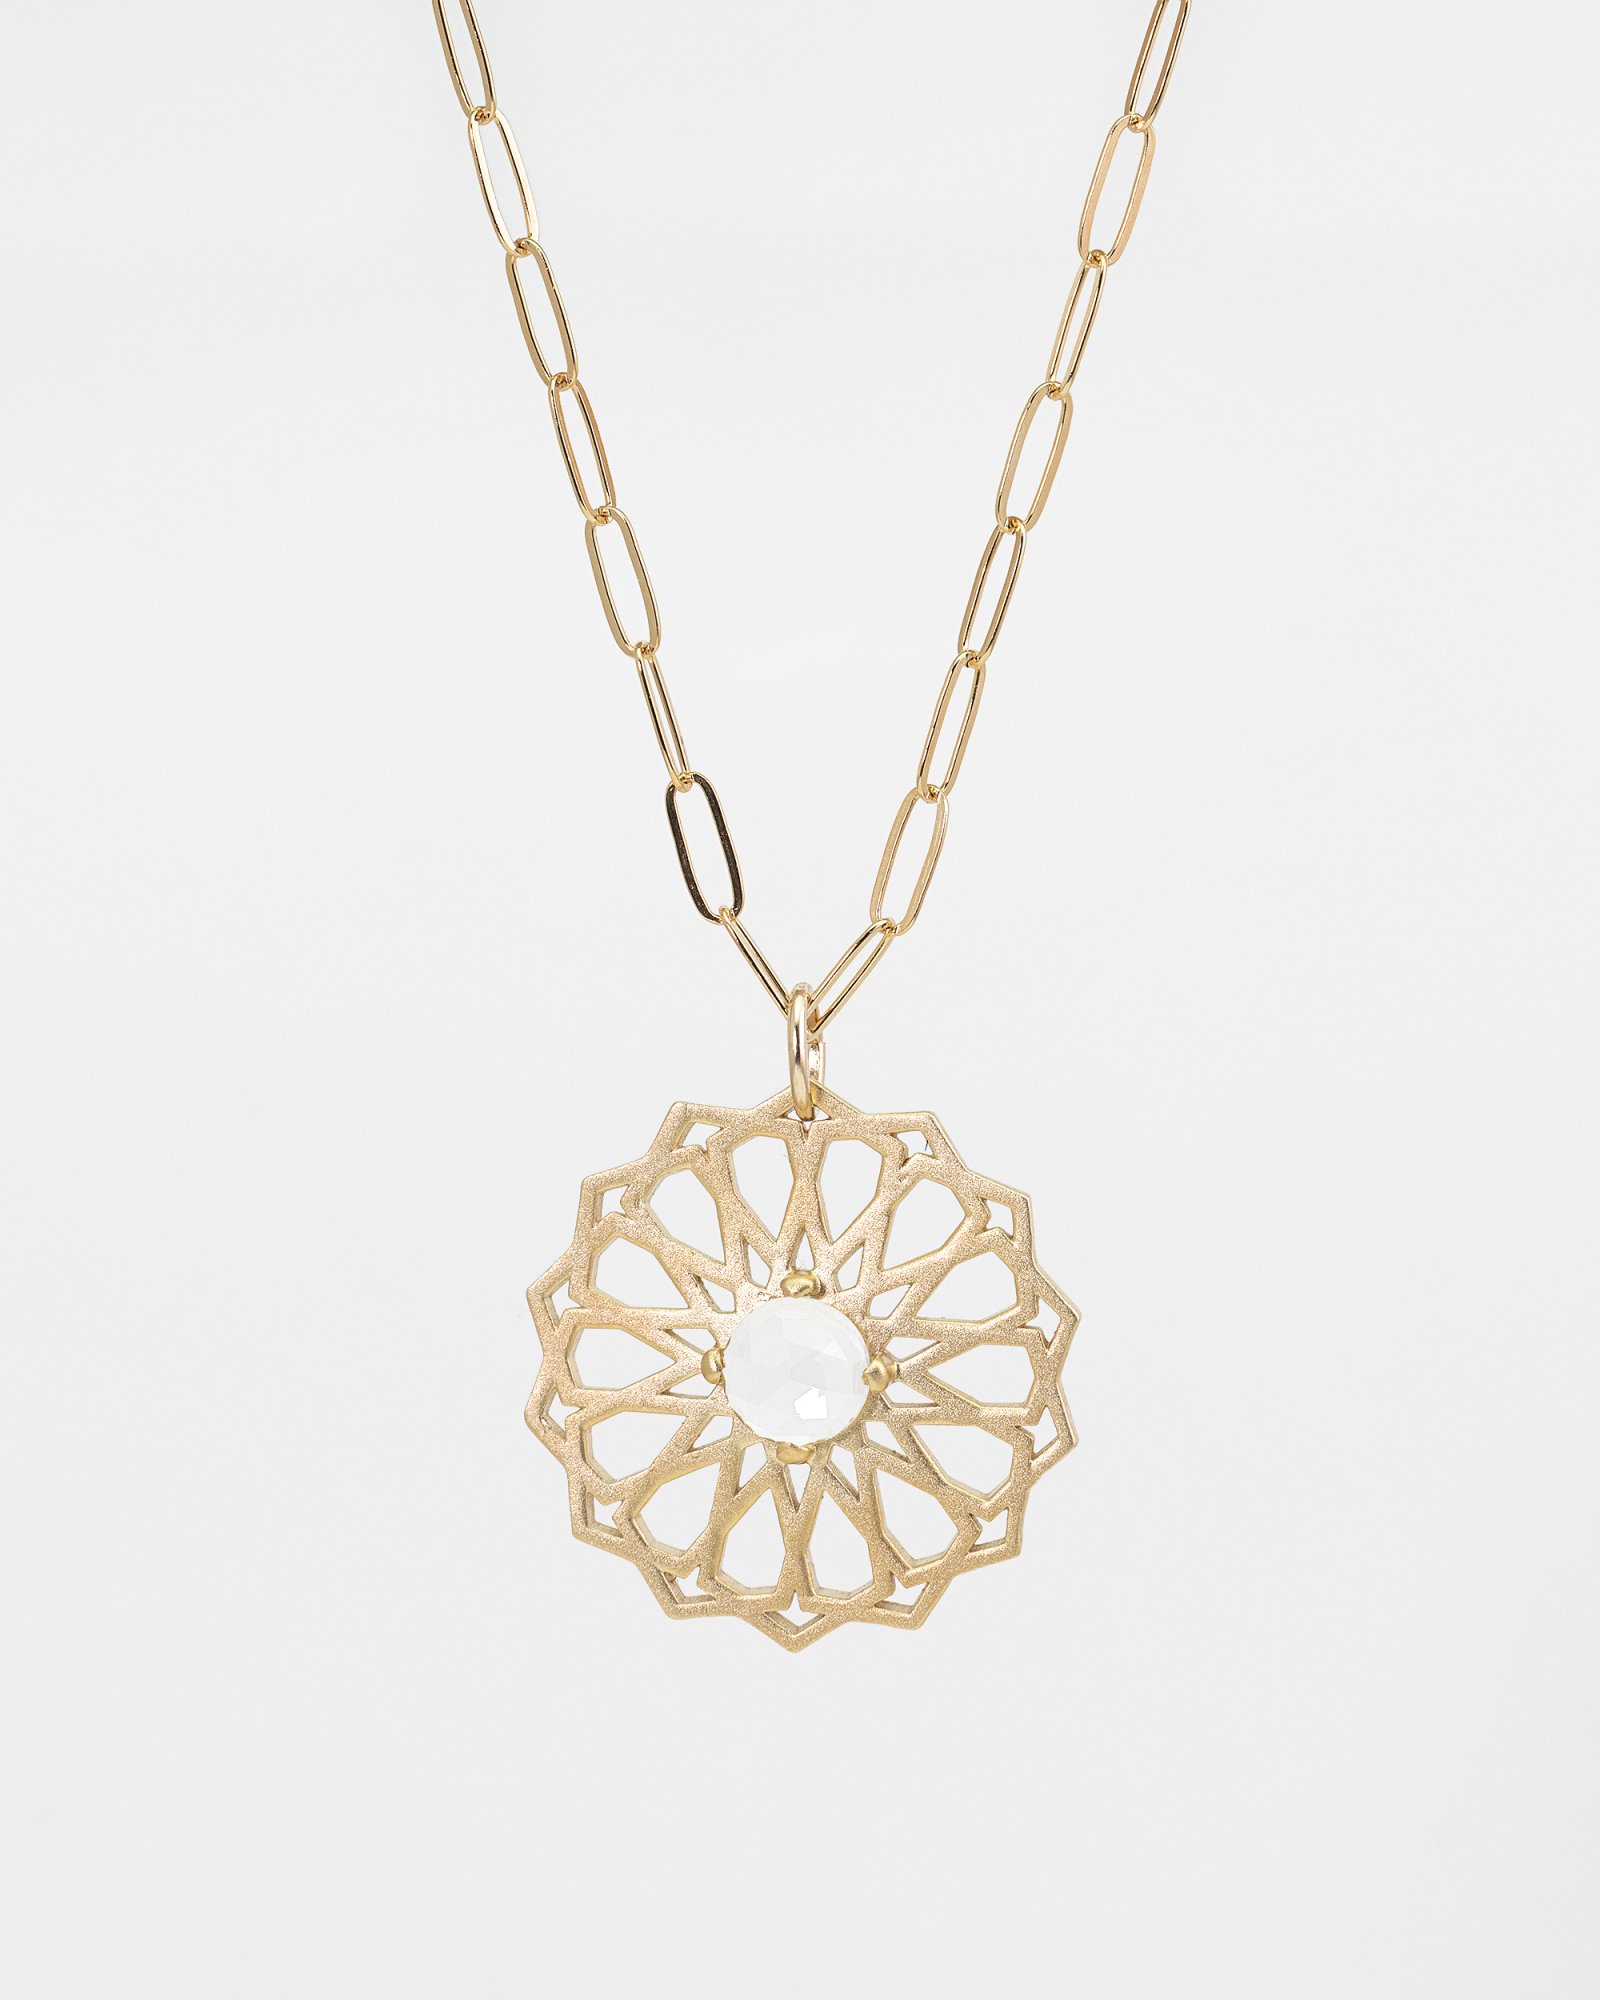 Rosette Stone Necklace / White Topaz